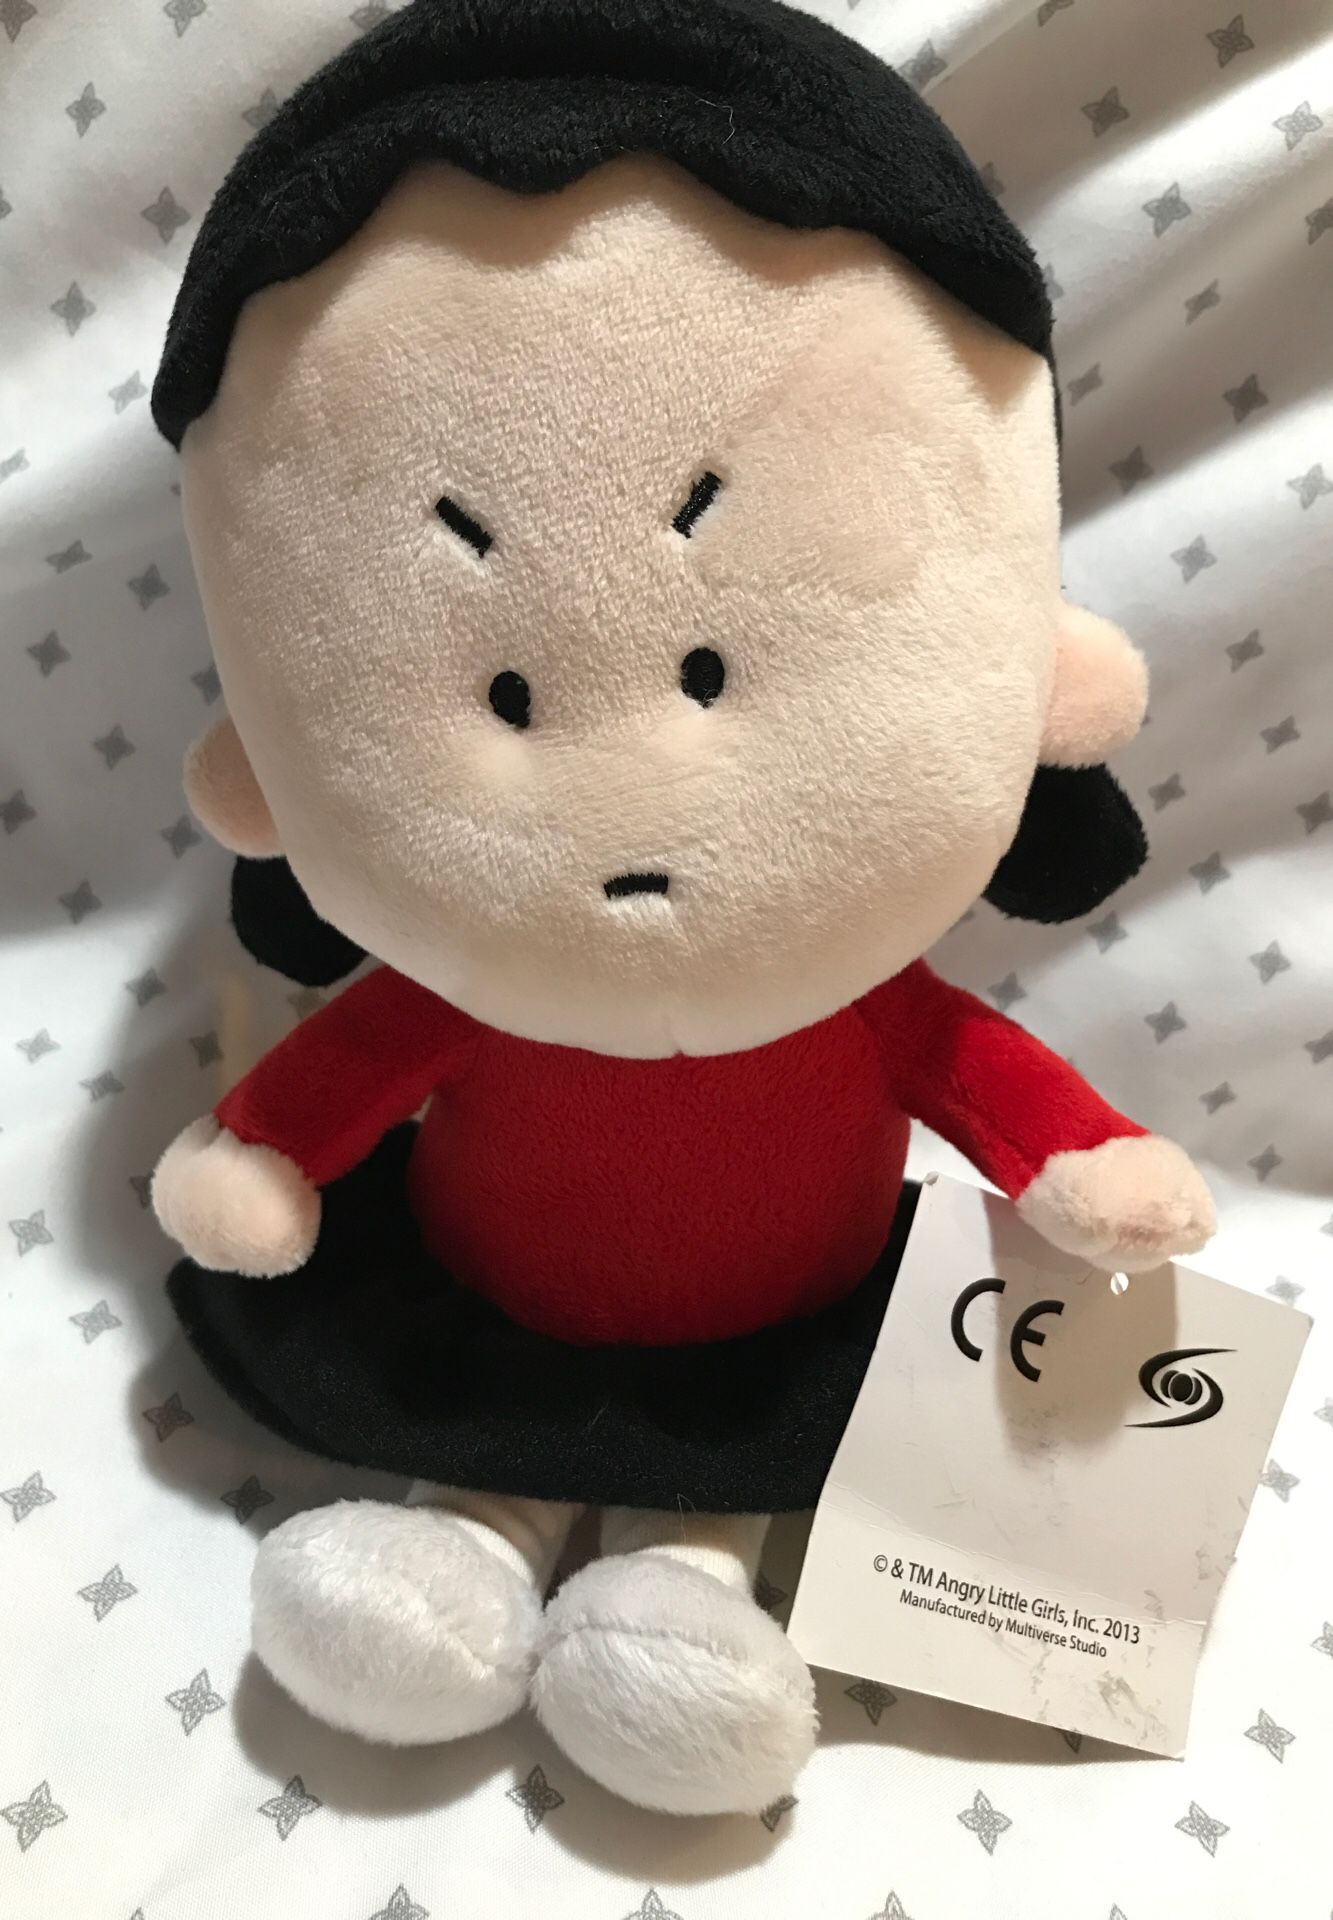 8 inch angry little Asian stuffed animal beanbag $8